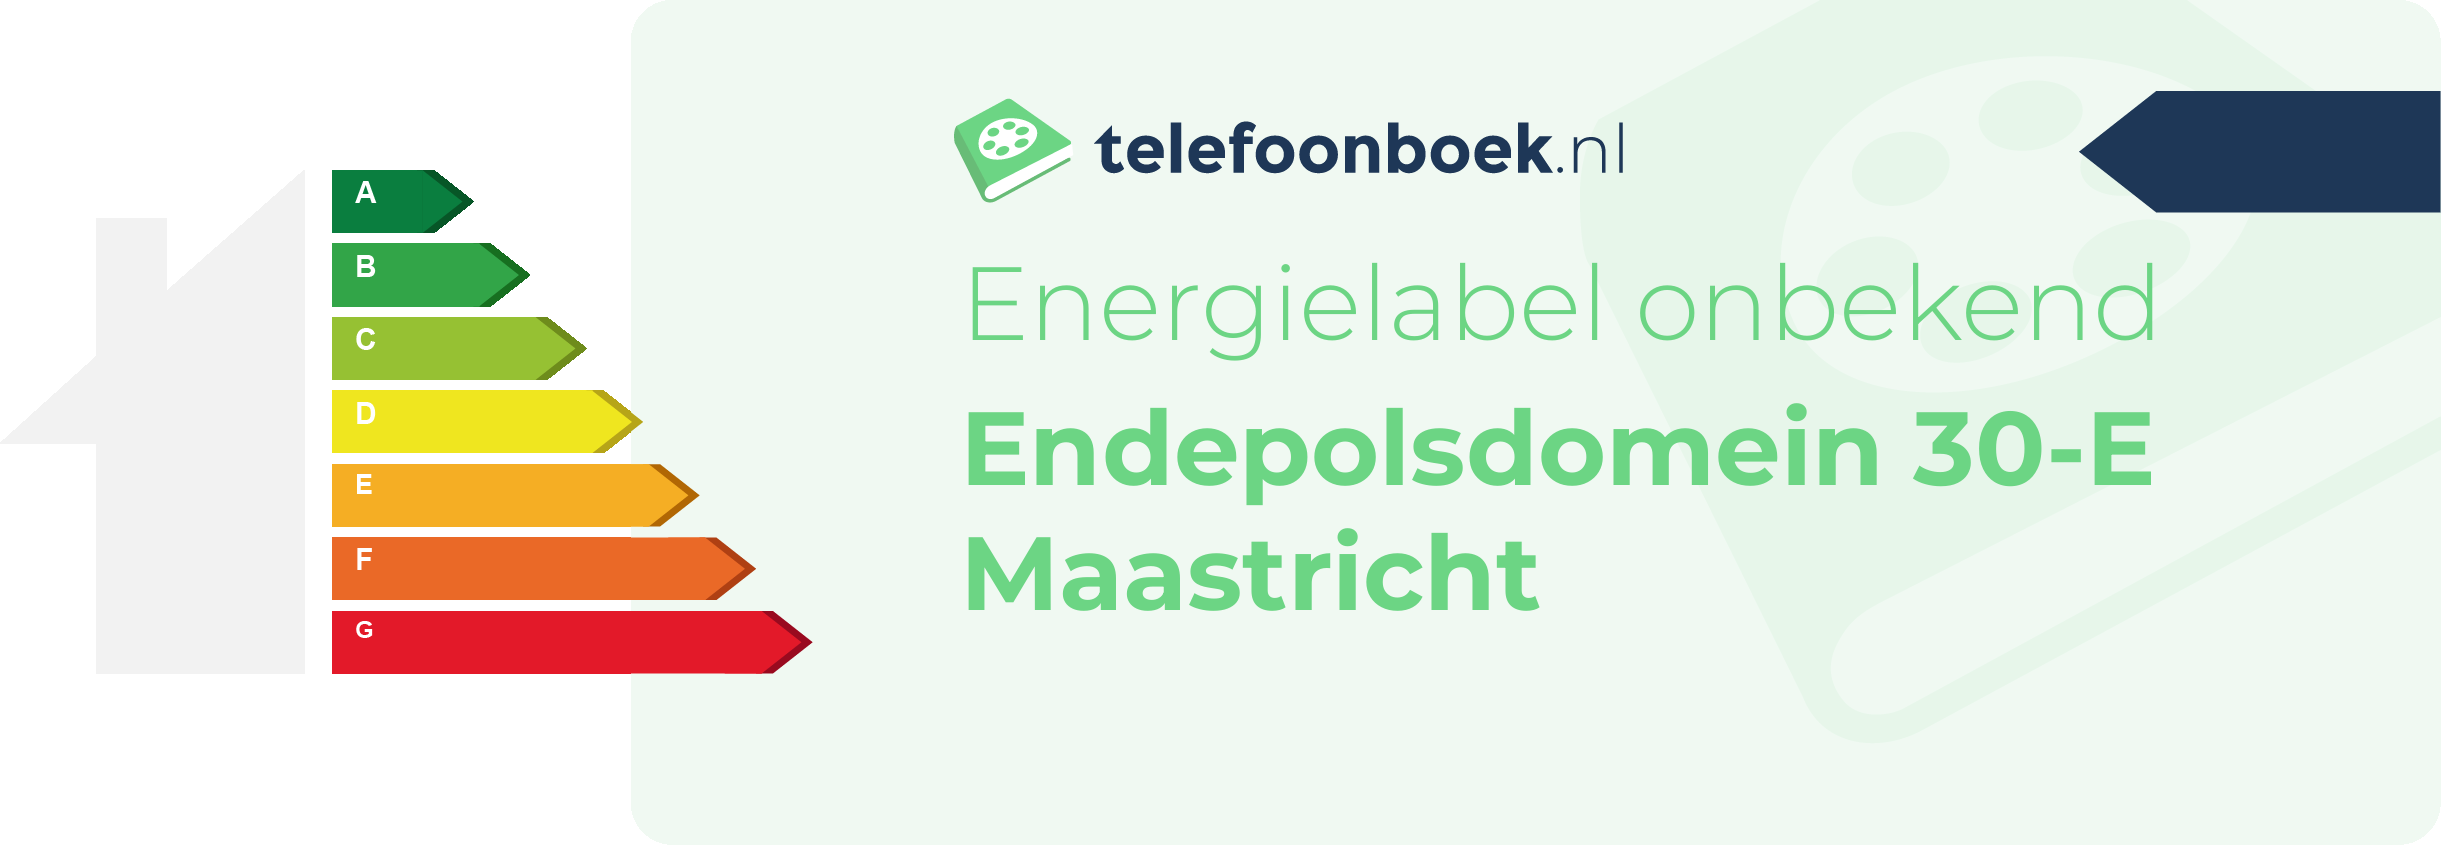 Energielabel Endepolsdomein 30-E Maastricht